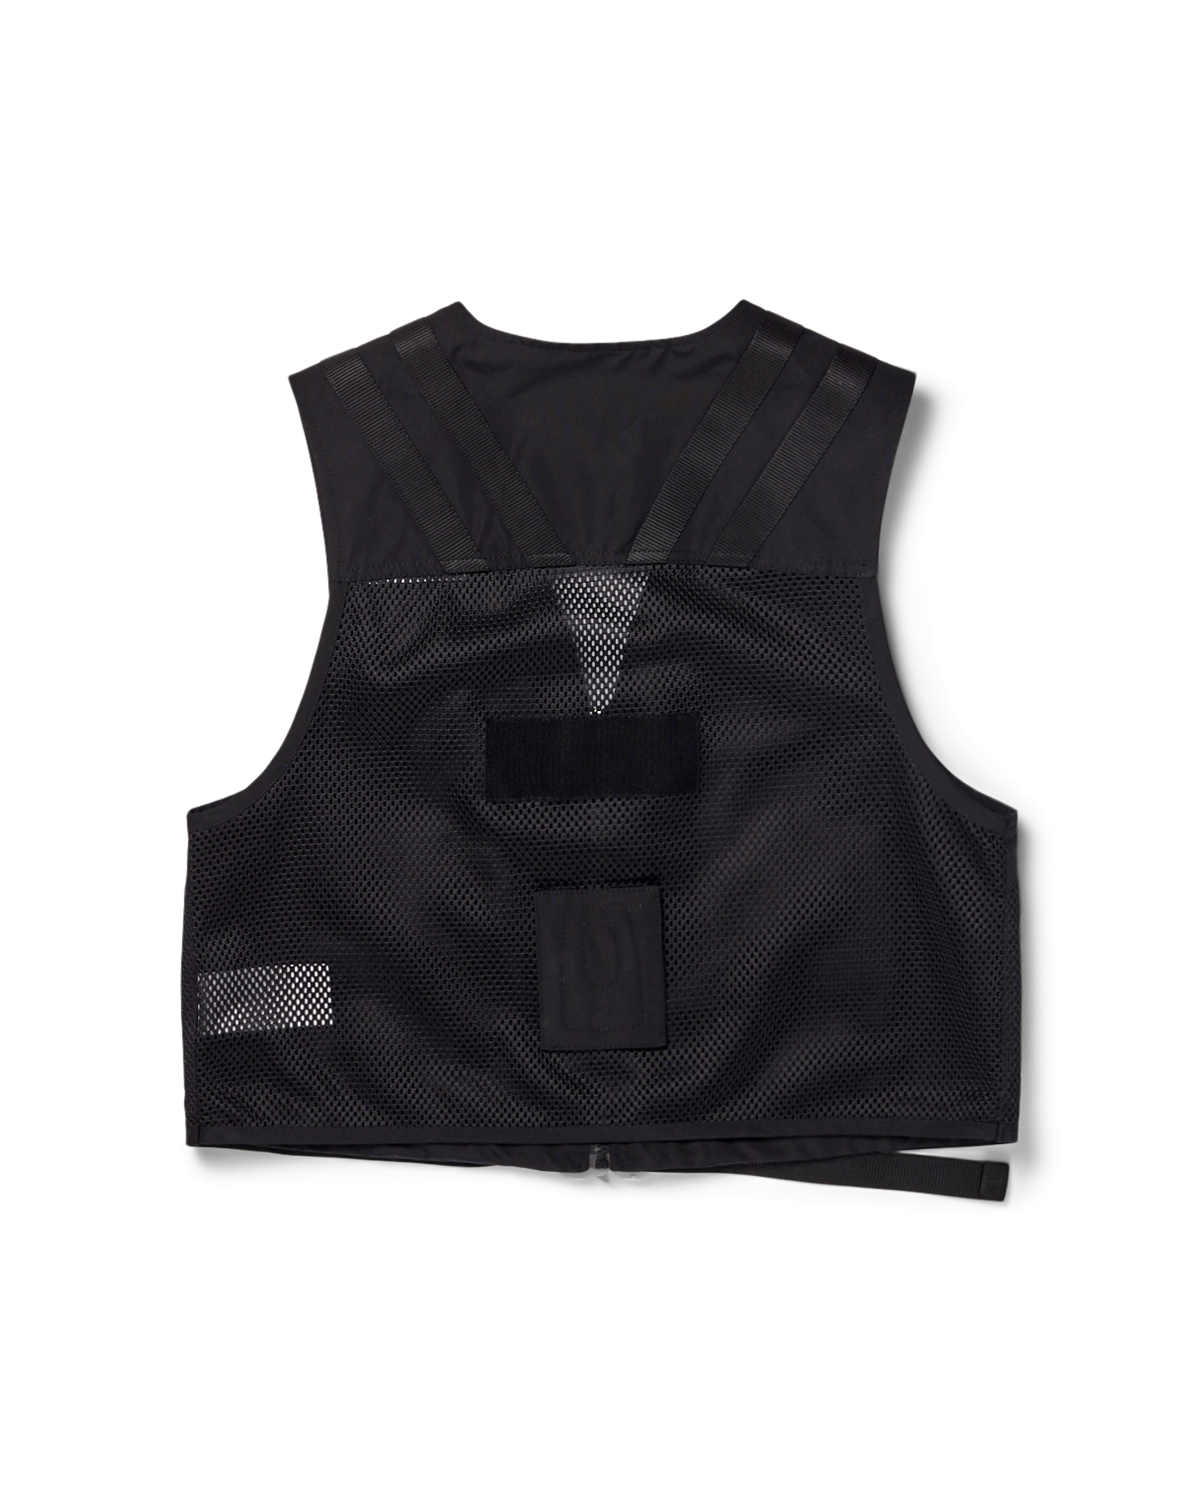 Tactical Vest - The Weekend 1017 ALYX 9SM Tops Vest Black